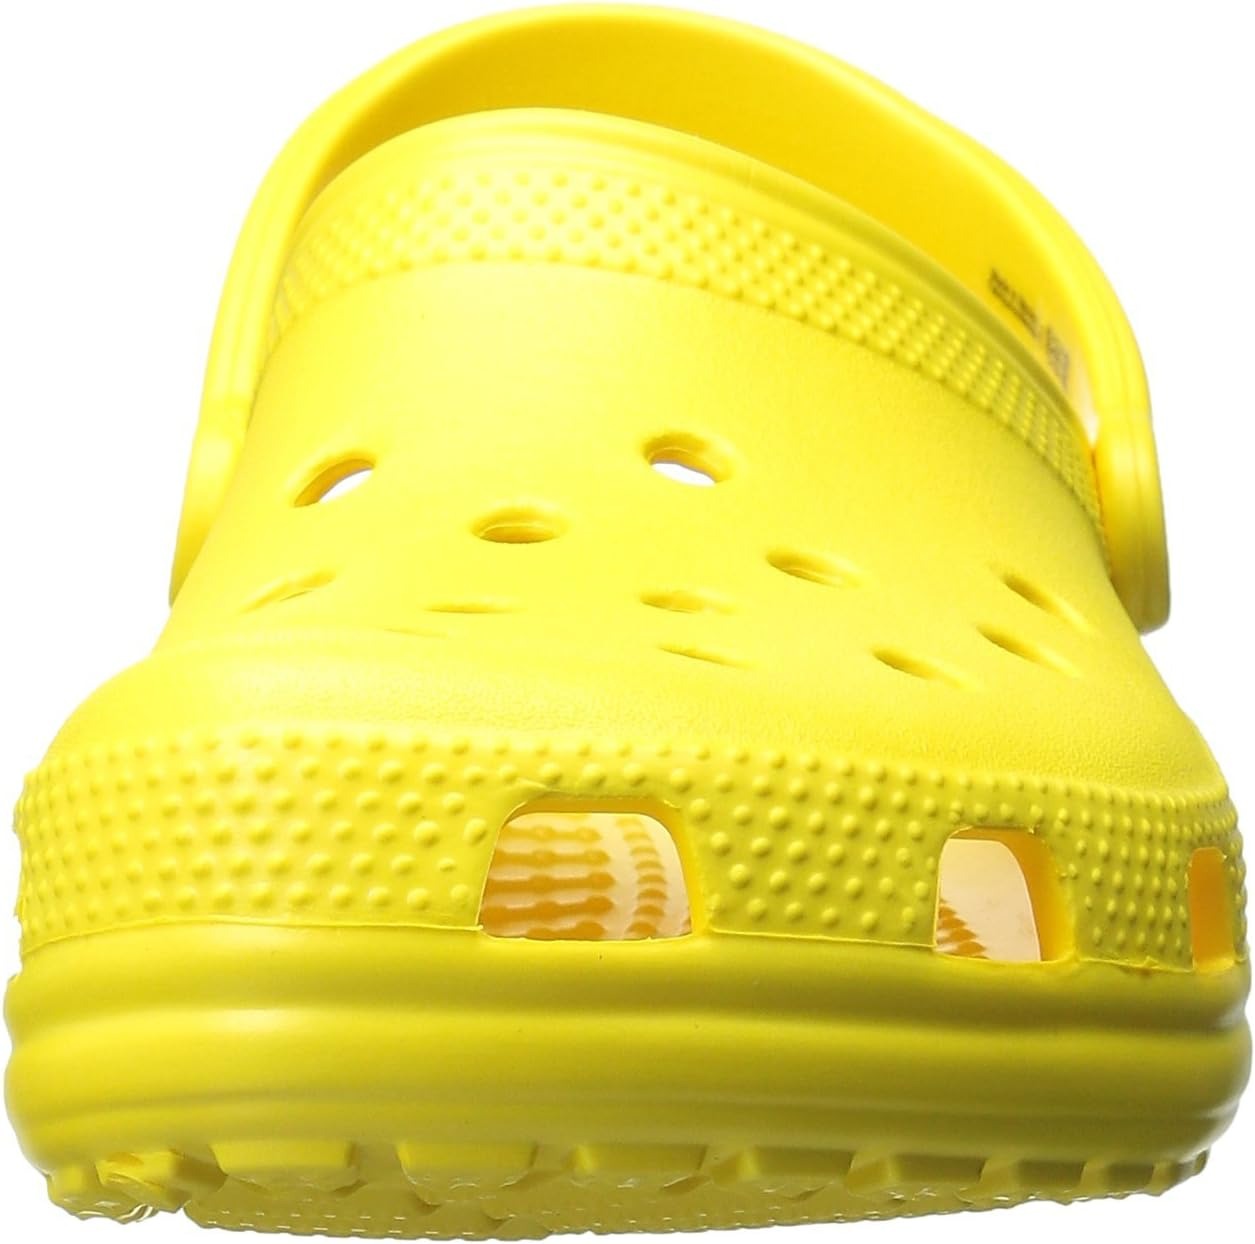 Crocs Classic Yellow Unisex Clog